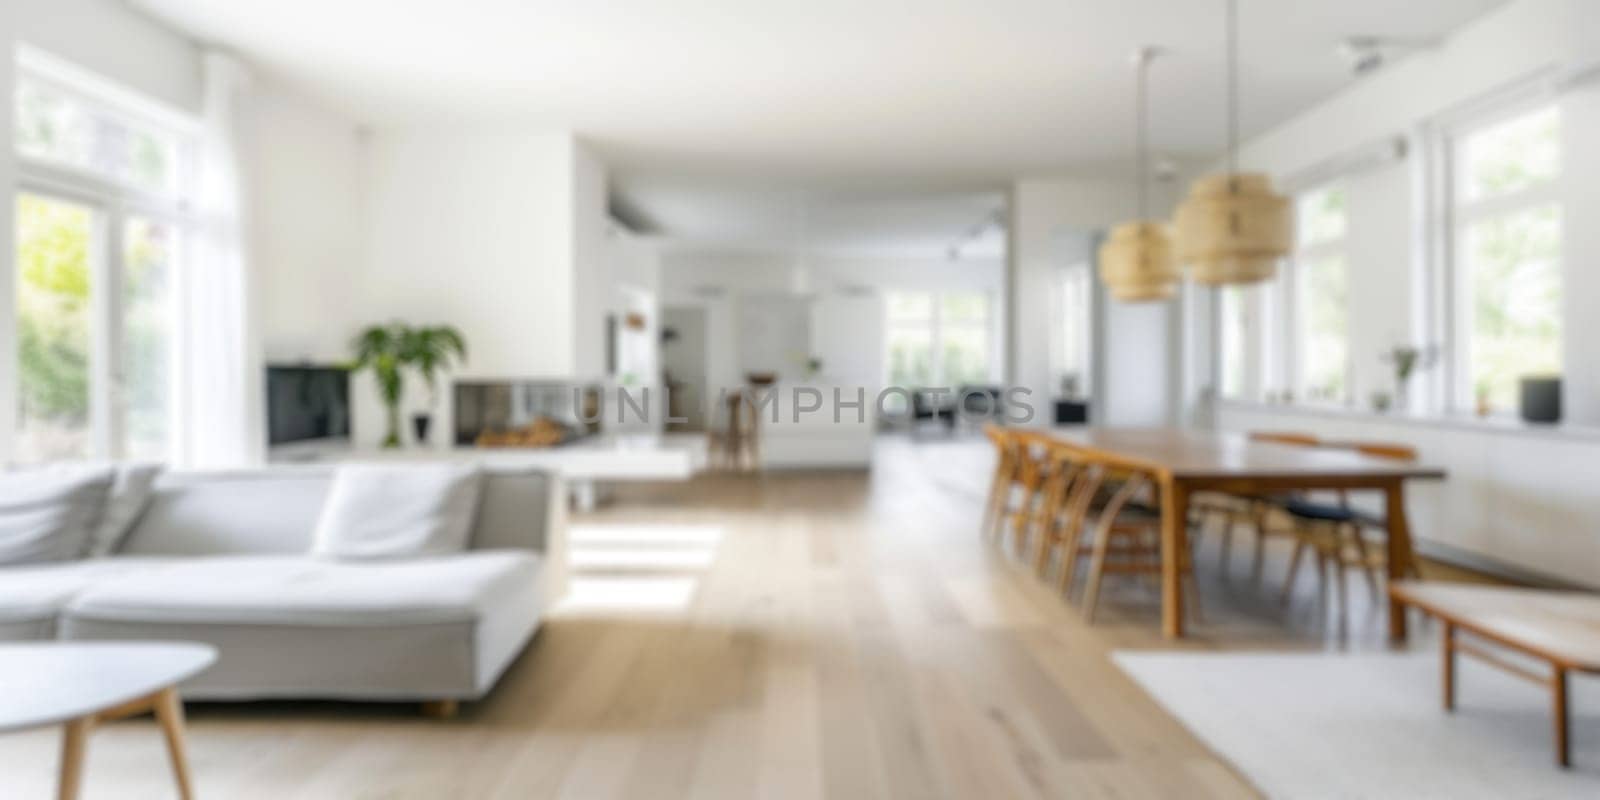 Blurred Modern Home Interior. Resplendent. by biancoblue